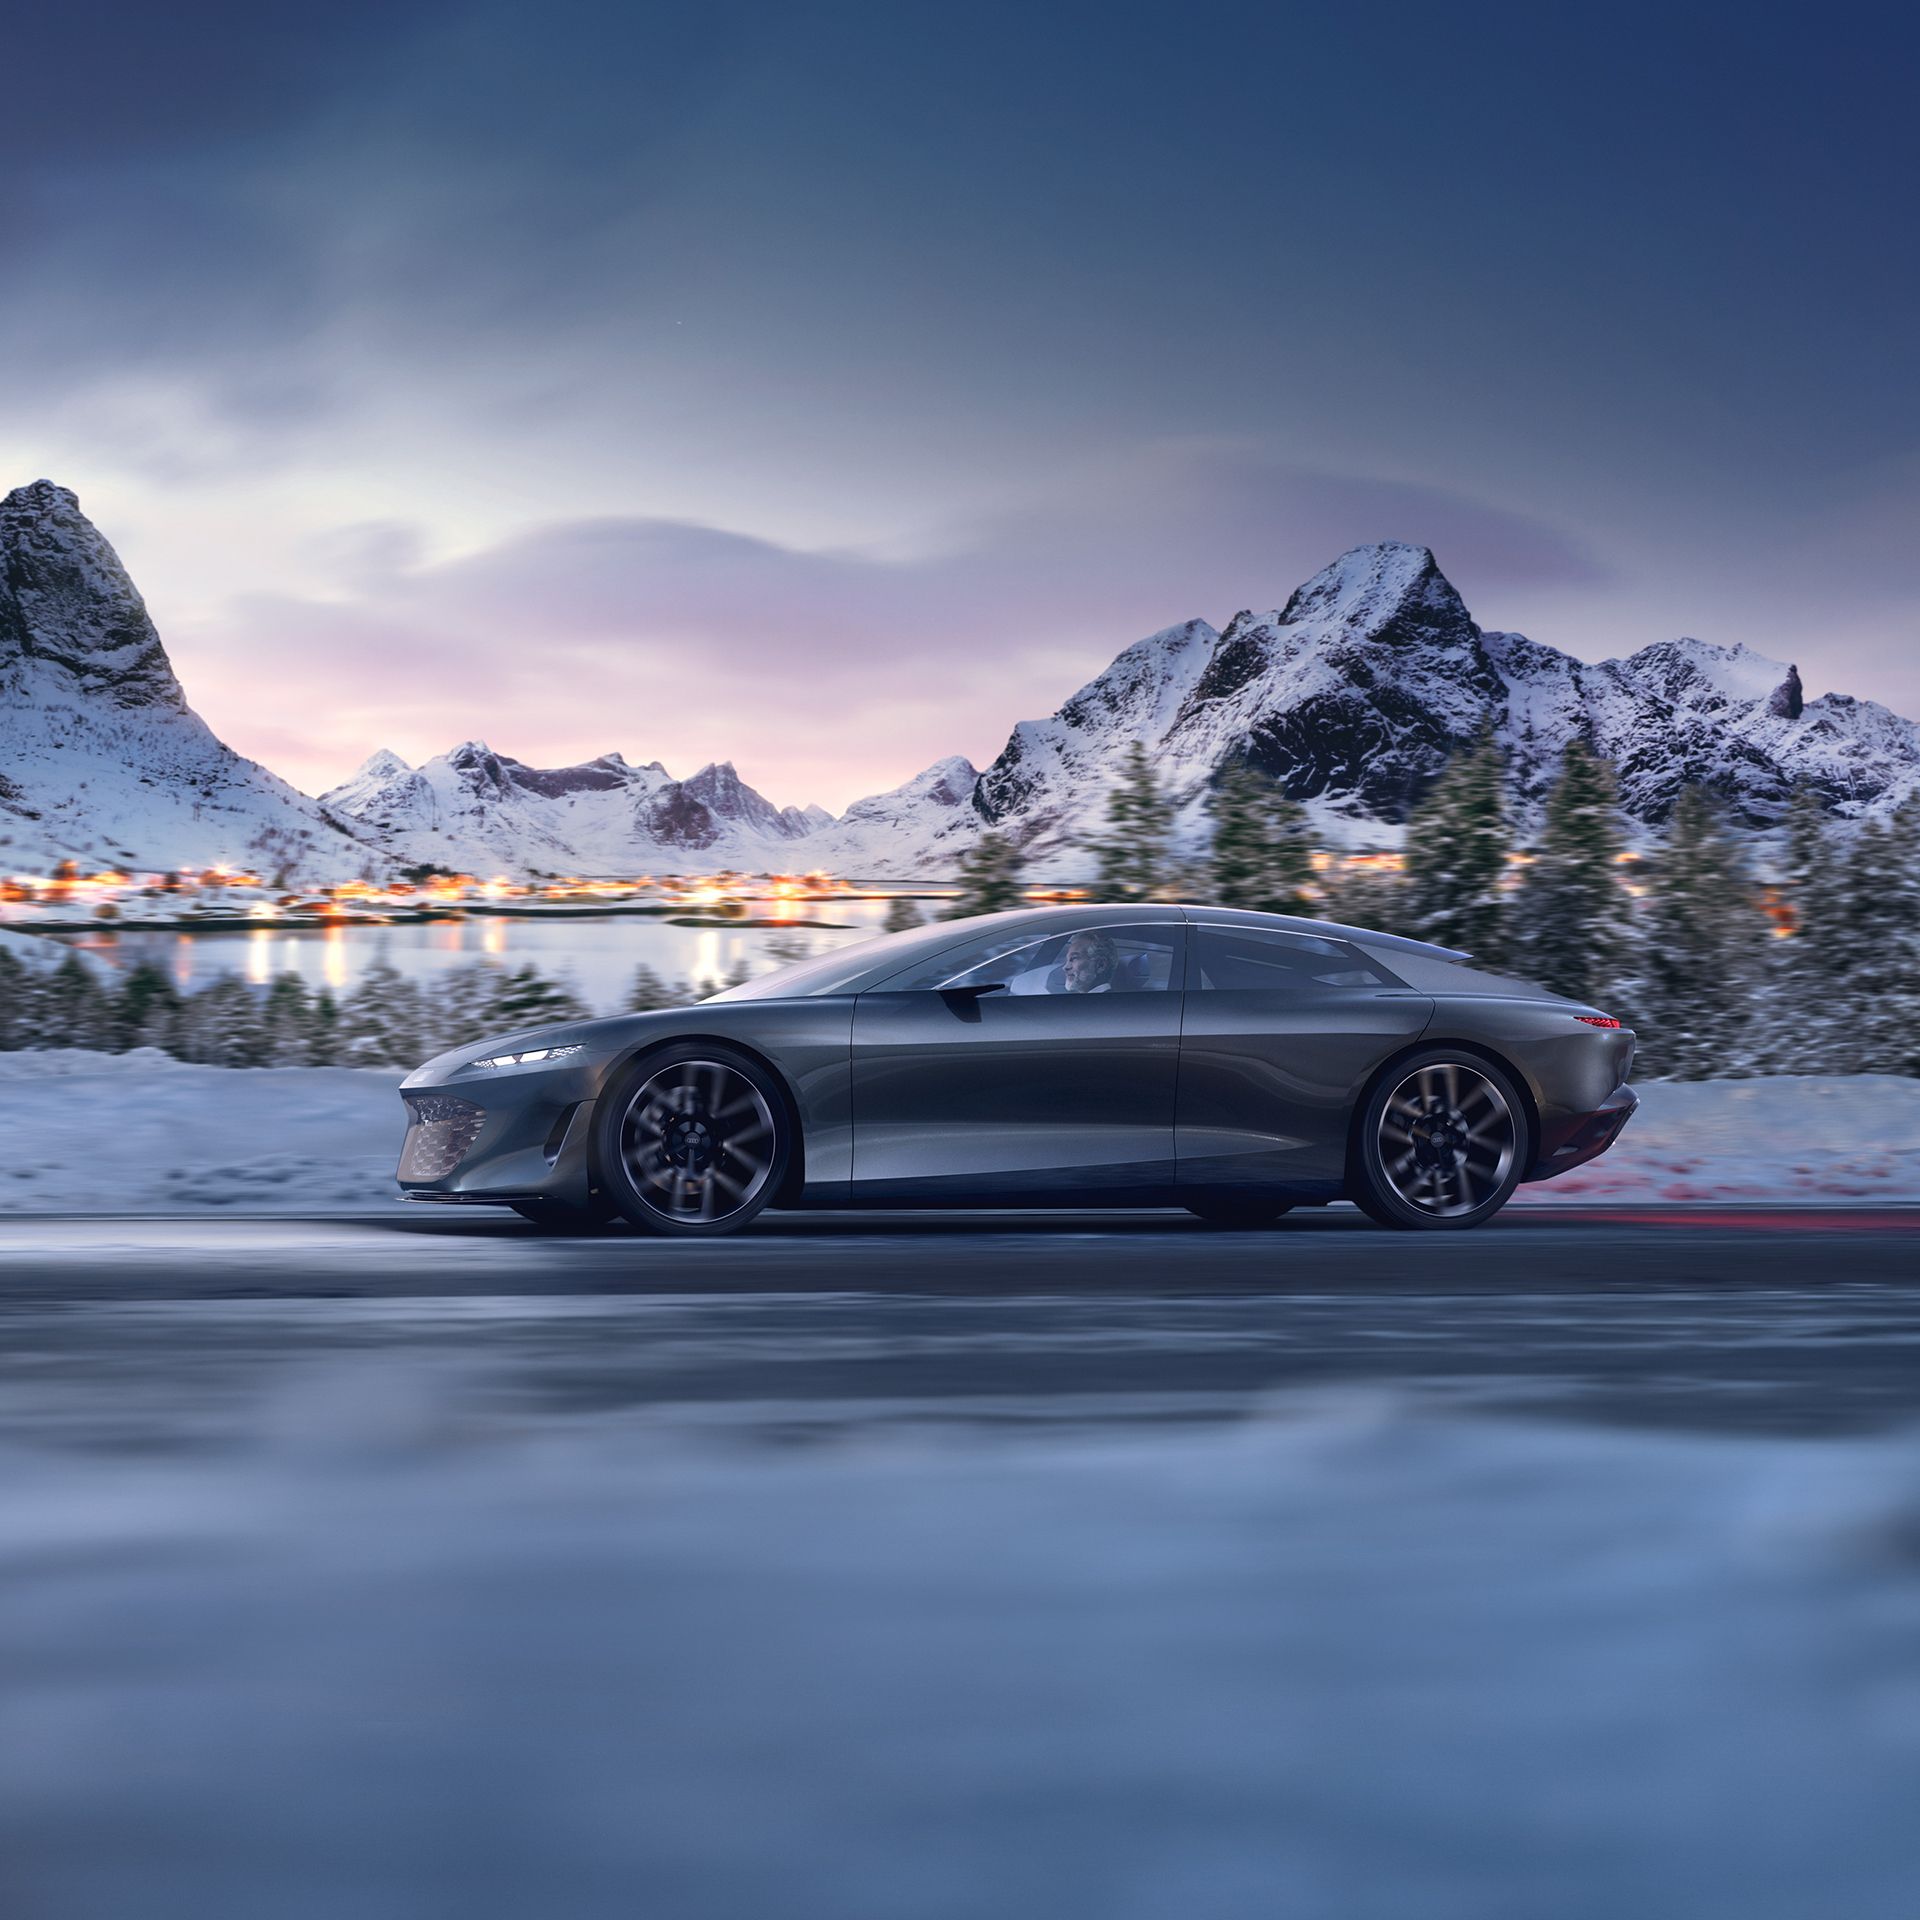 The Audi grandsphere concept in a winter landscape.